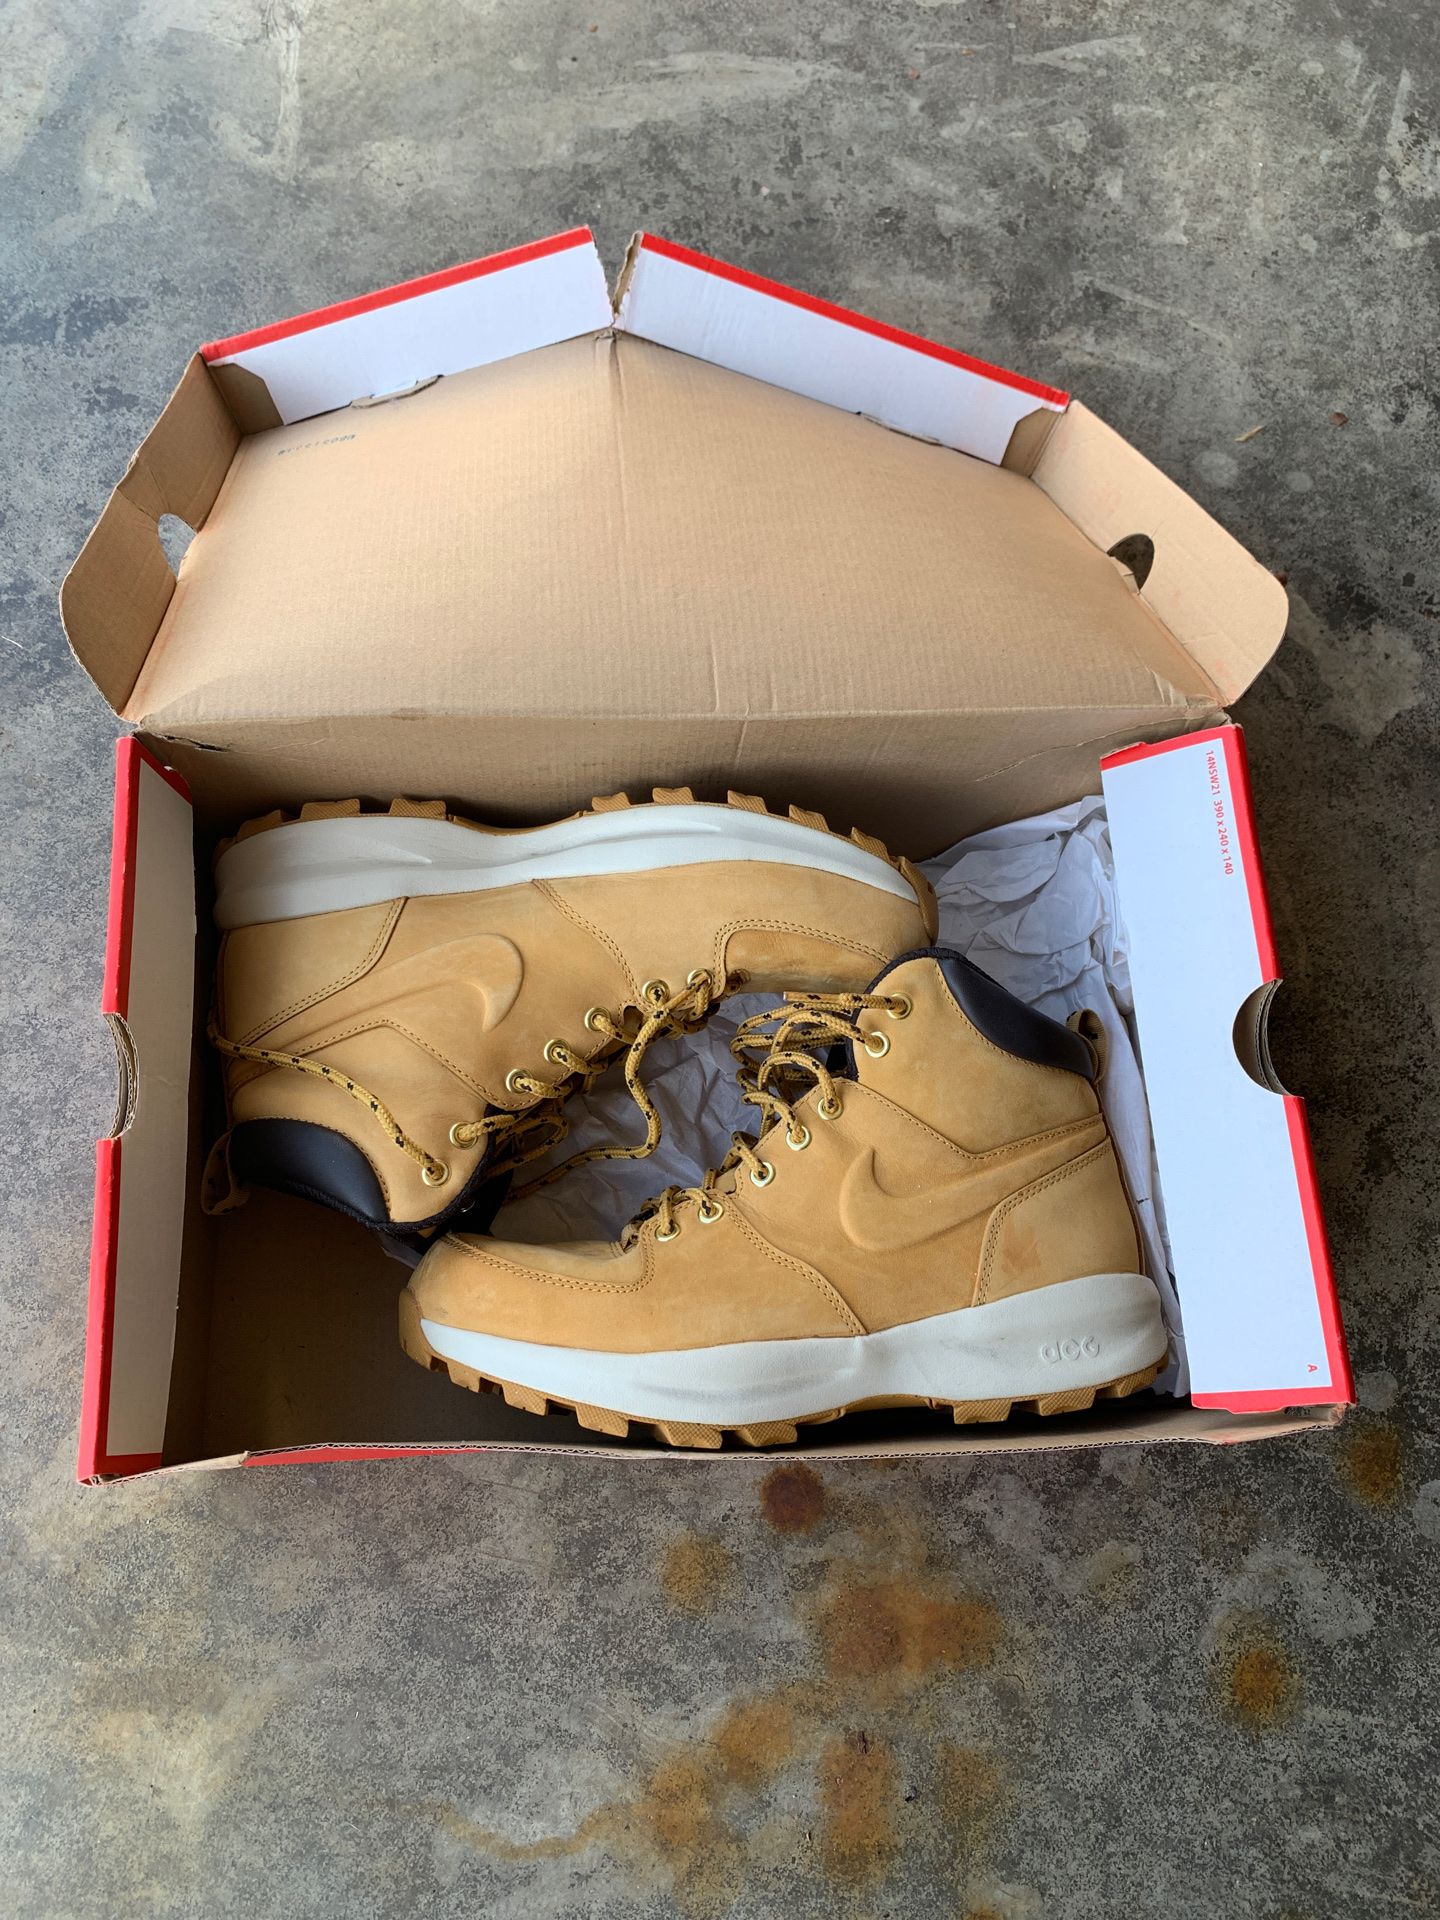 Men’s Nike boot size 9